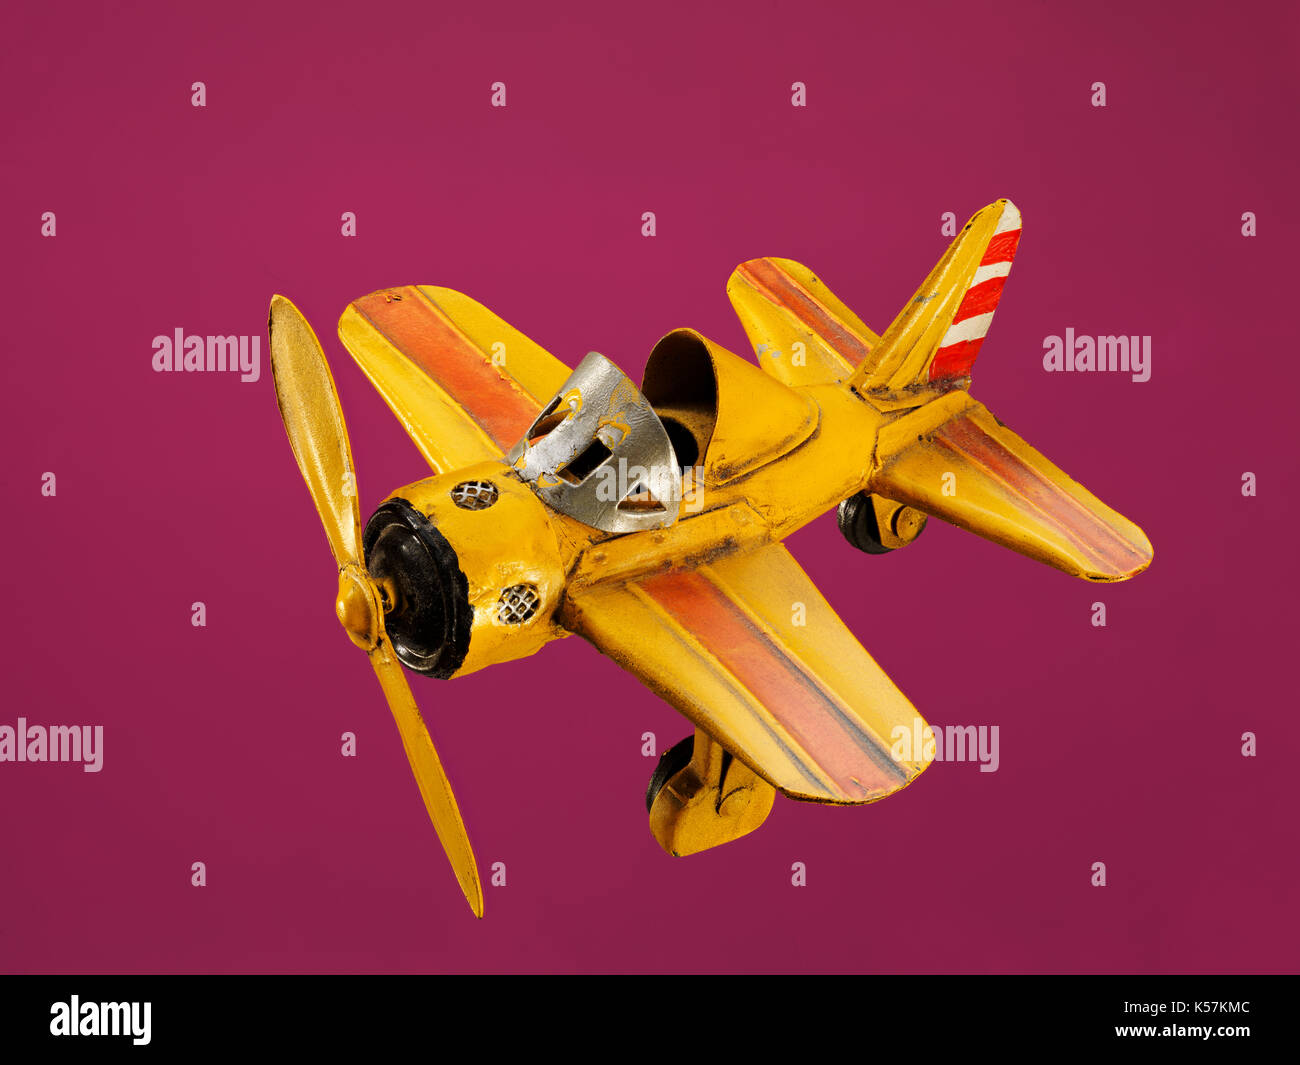 toy plane on dusky pink background Stock Photo